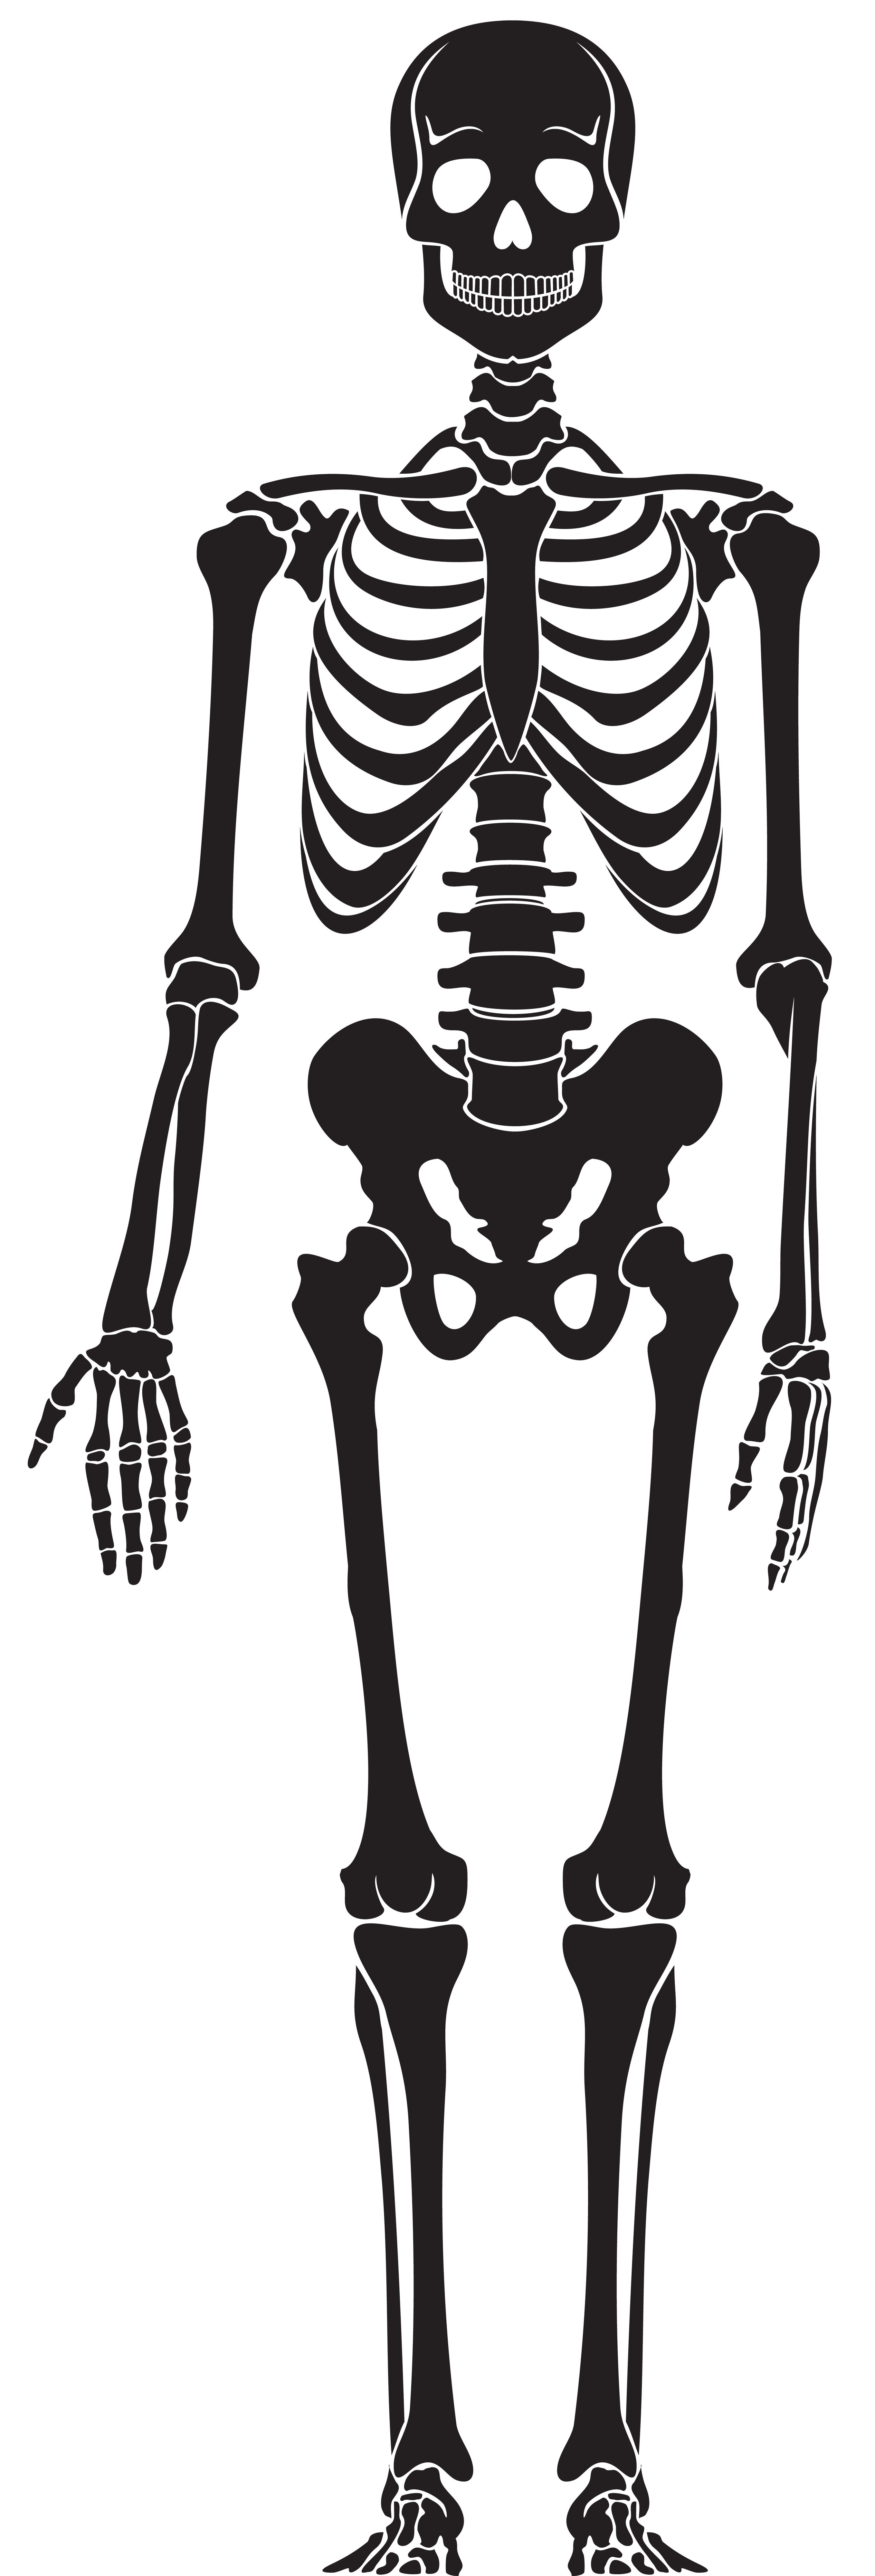 Vector Esqueleto Humano Png Clipart Humano Esqueleto Cuerpo Humano Images